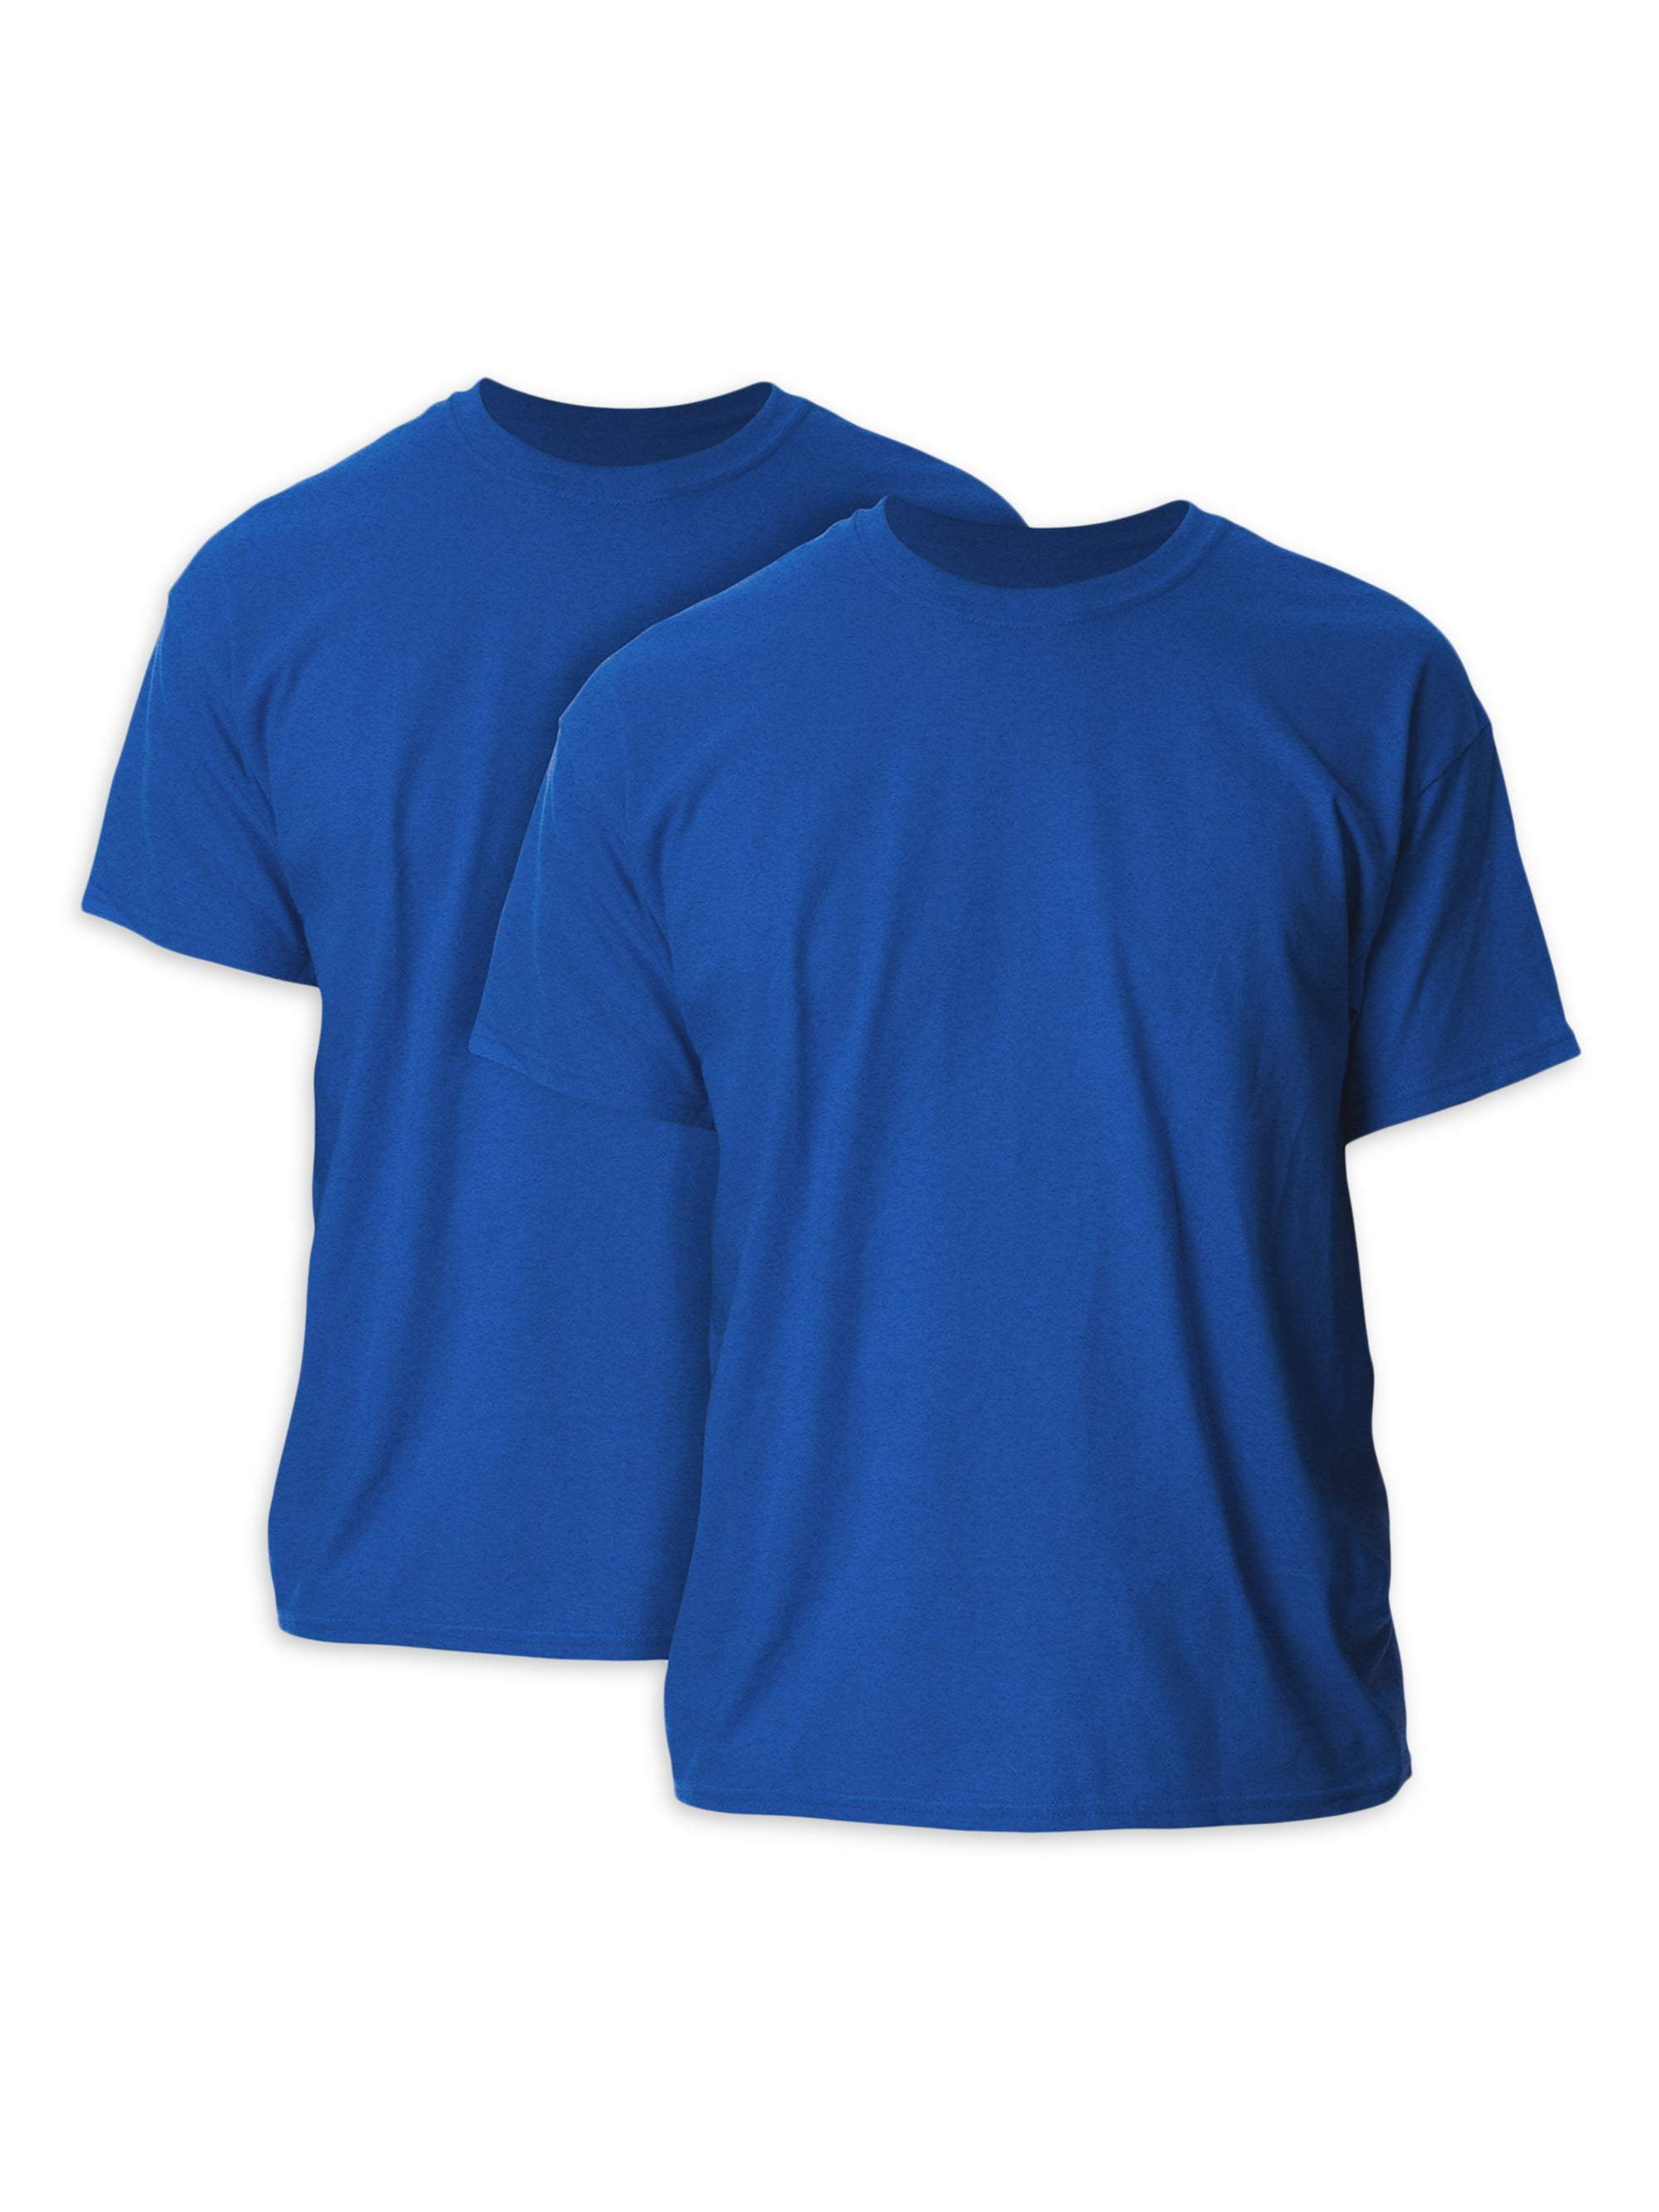 Gildan Short Sleeve Crew T-Shirt, 1 Each, Men's, Size: XL, Black